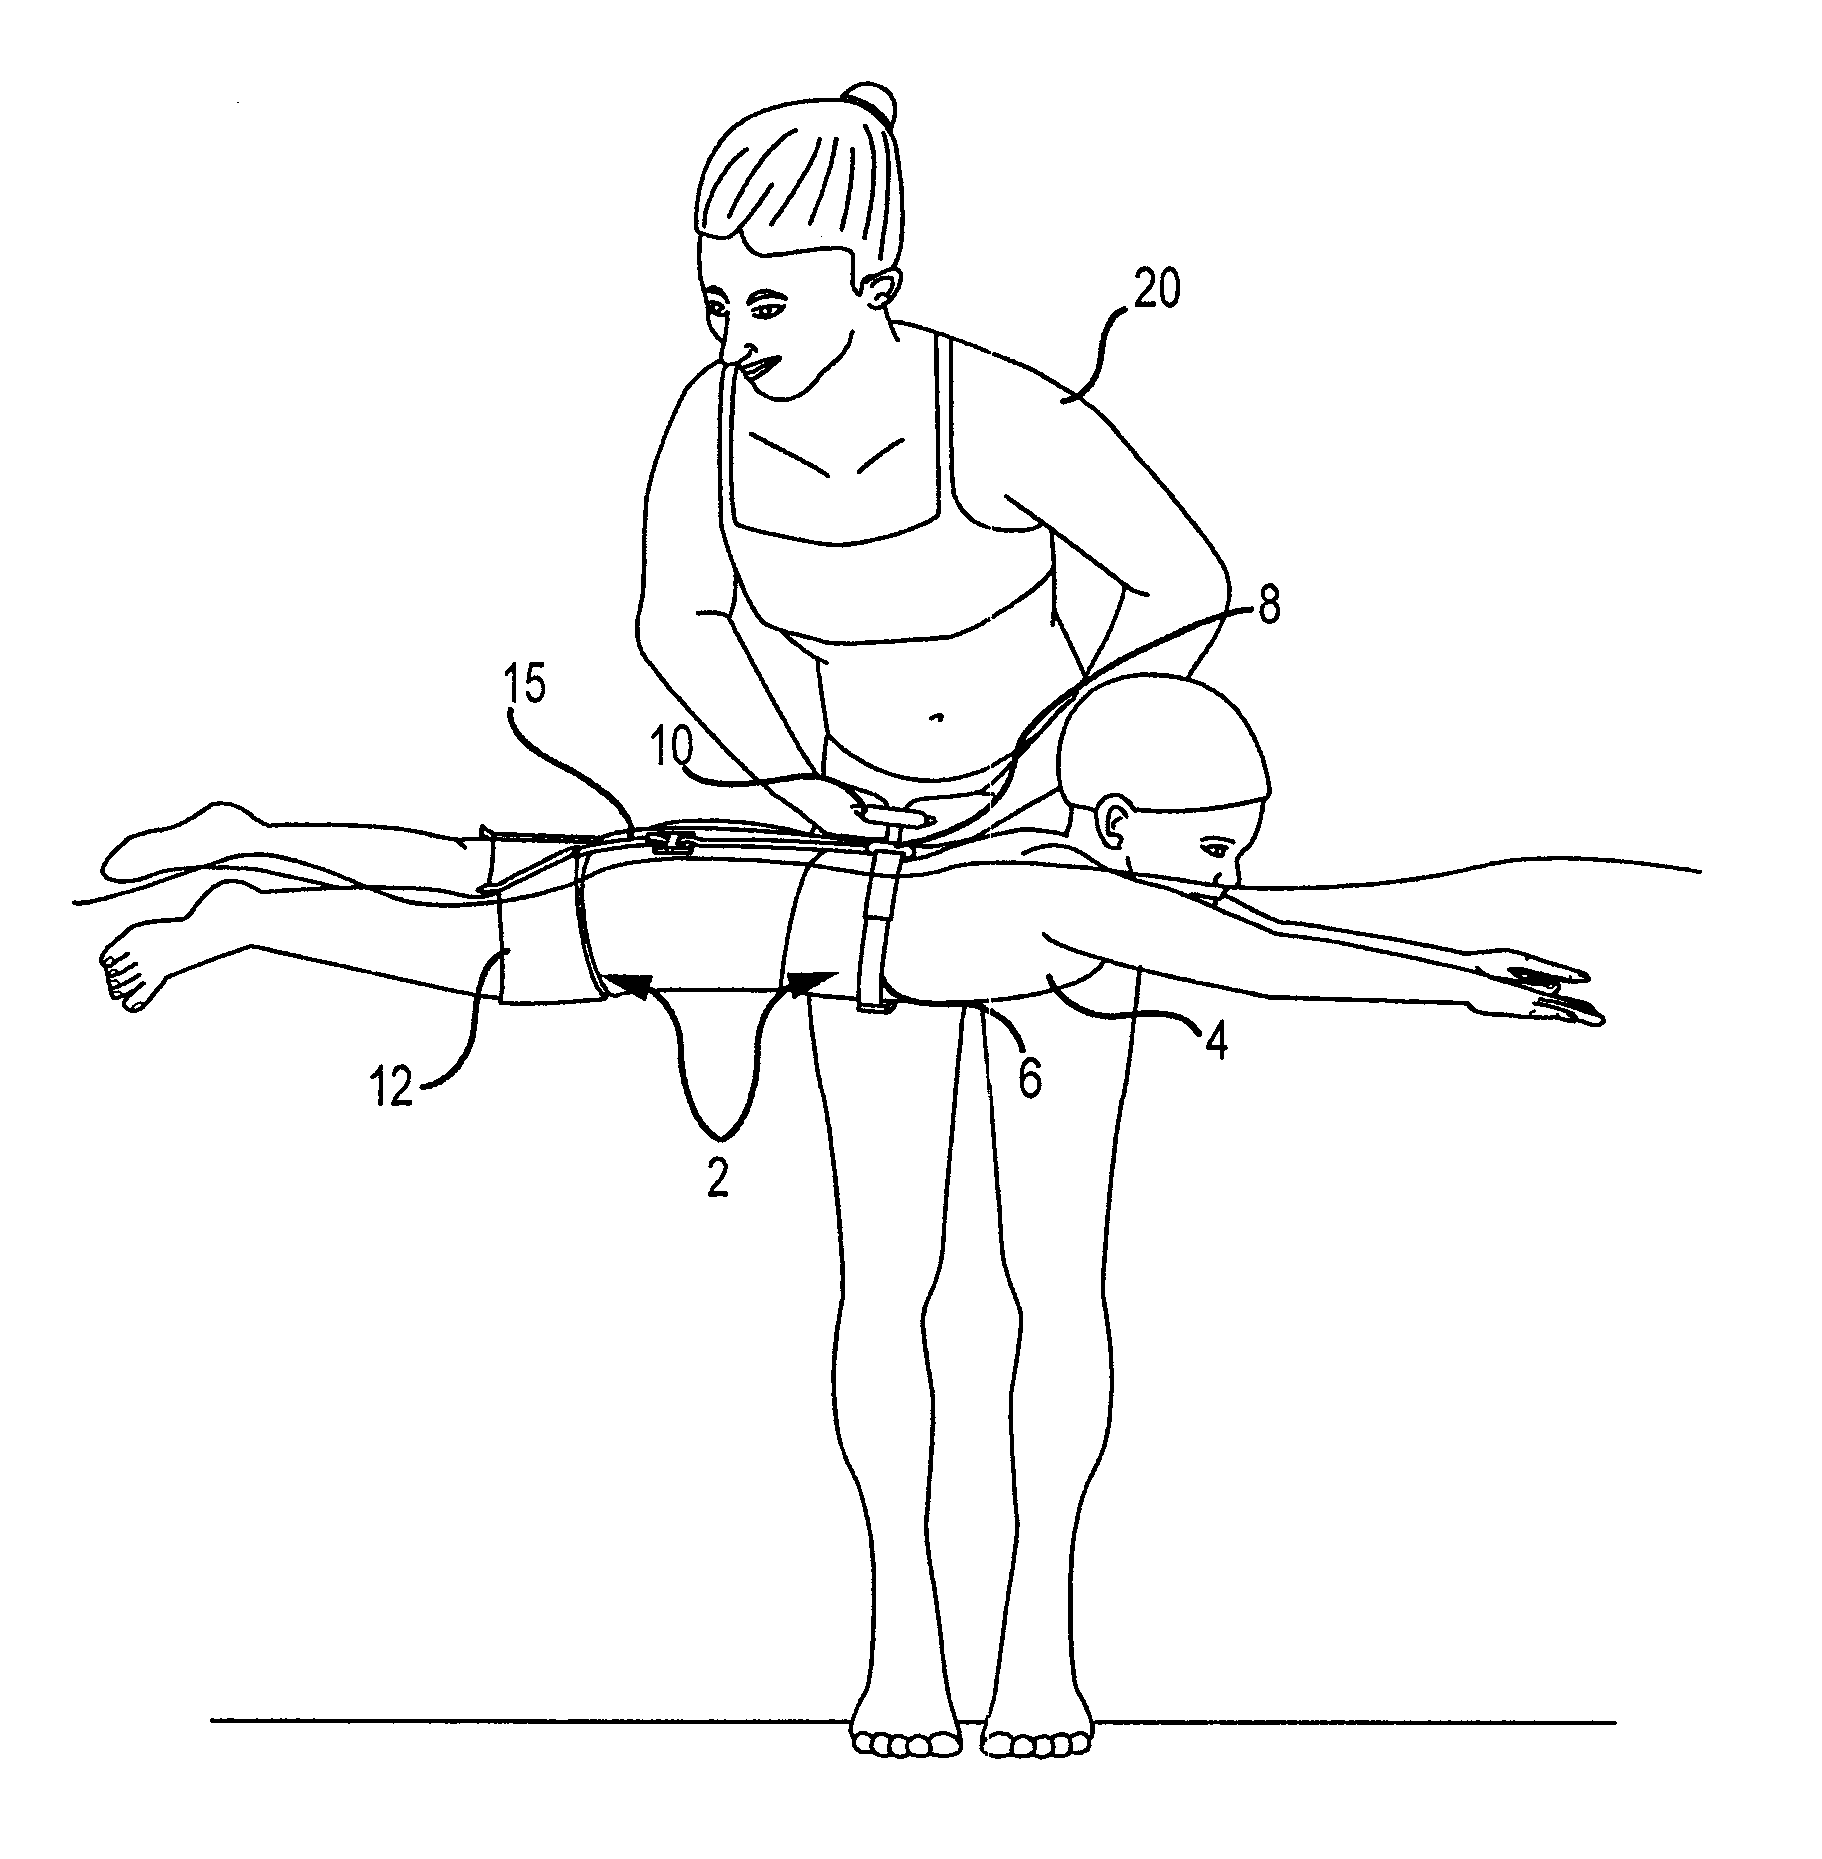 Swim training harness